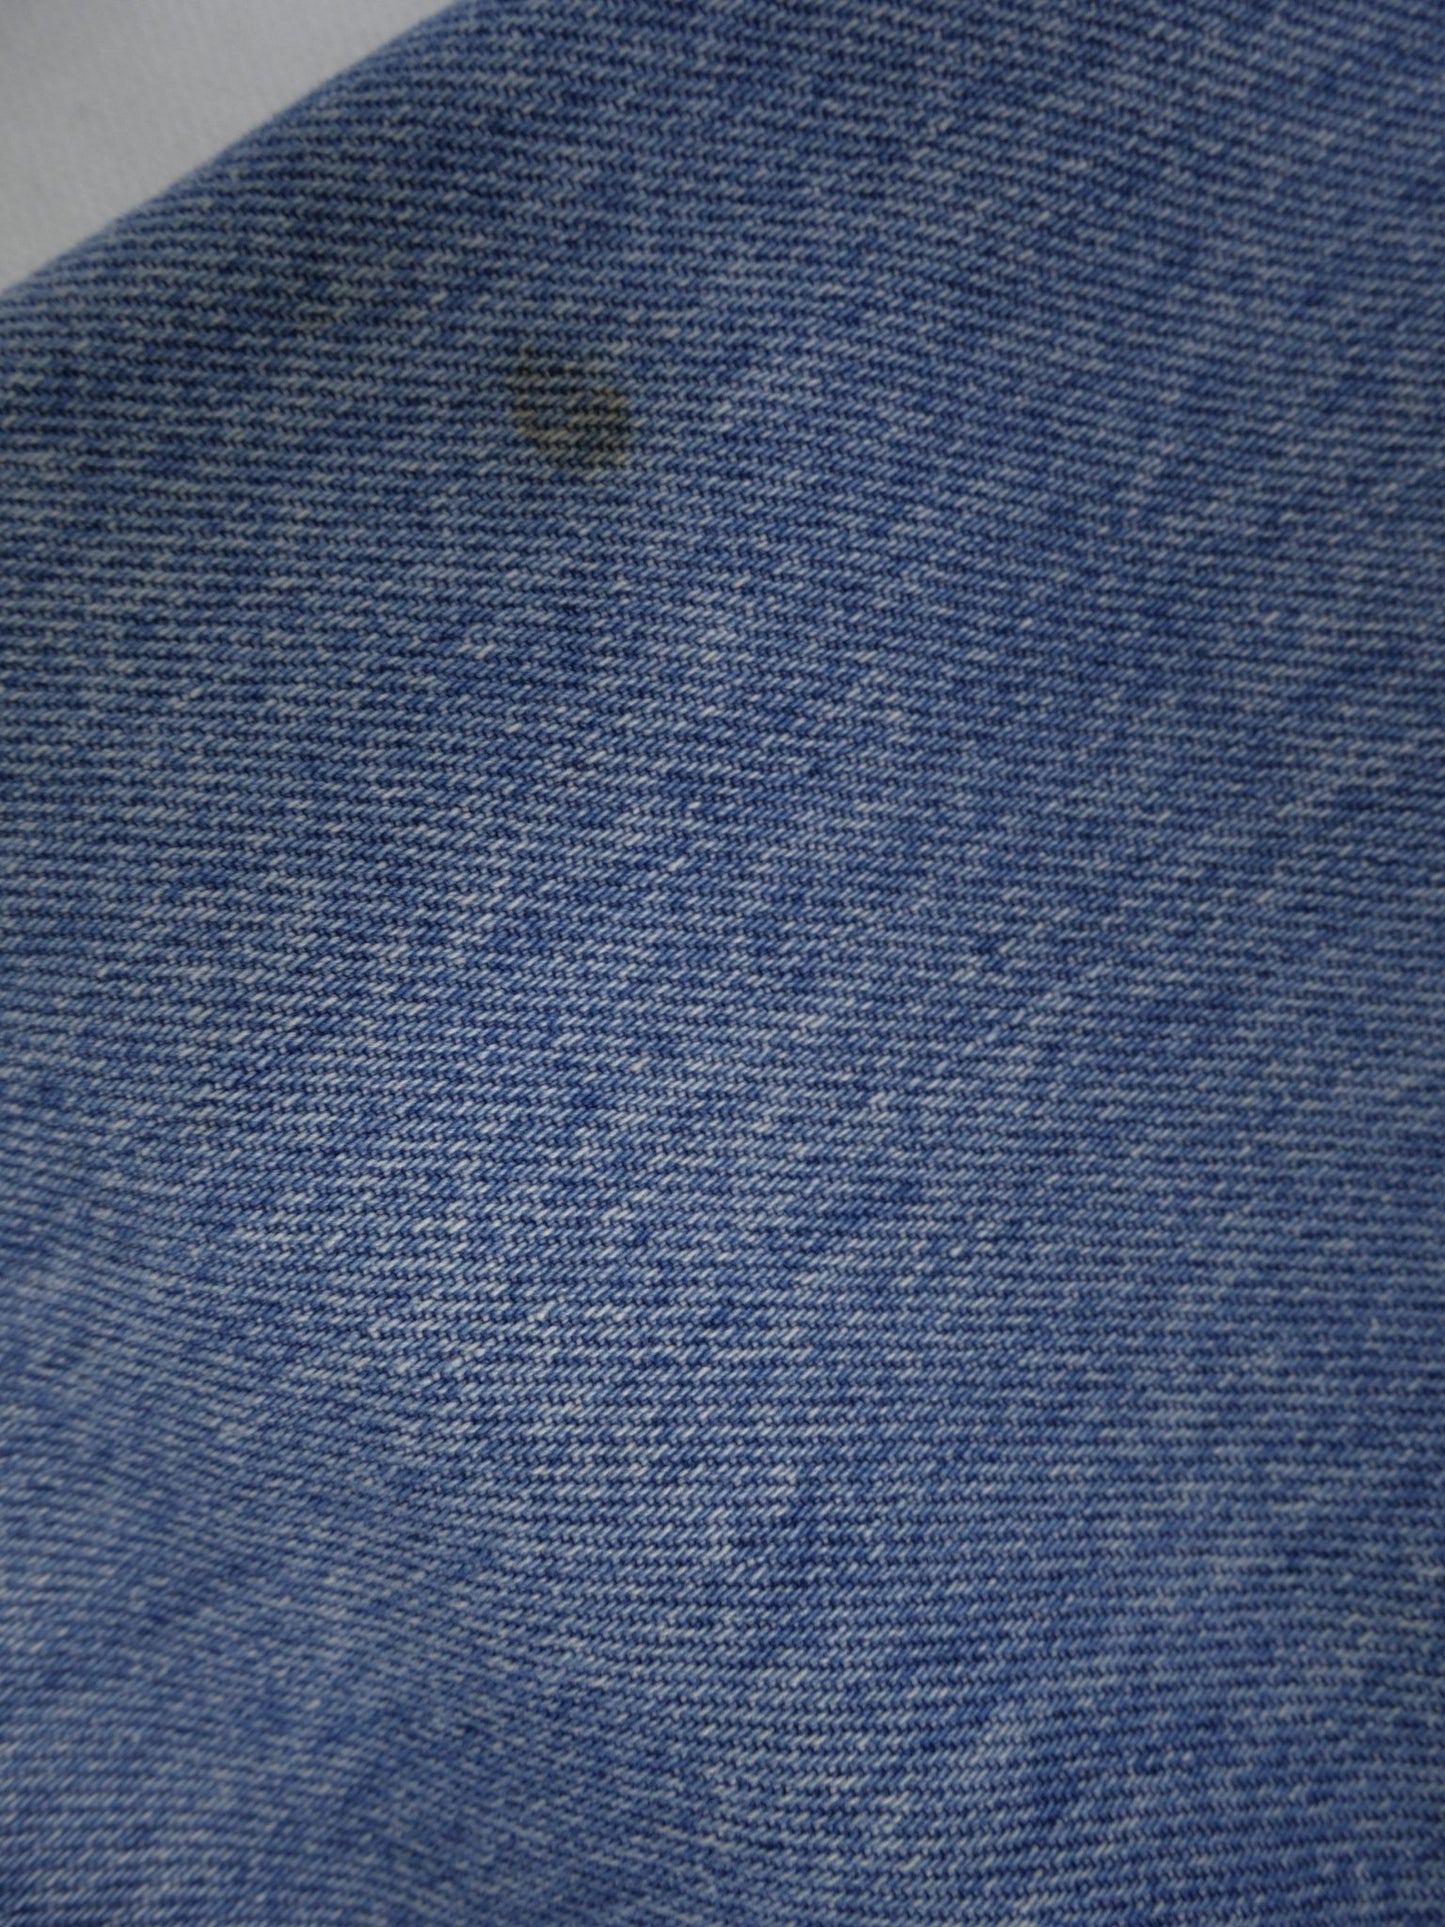 Levis embroidered Patch blue Denim Jacket - Peeces